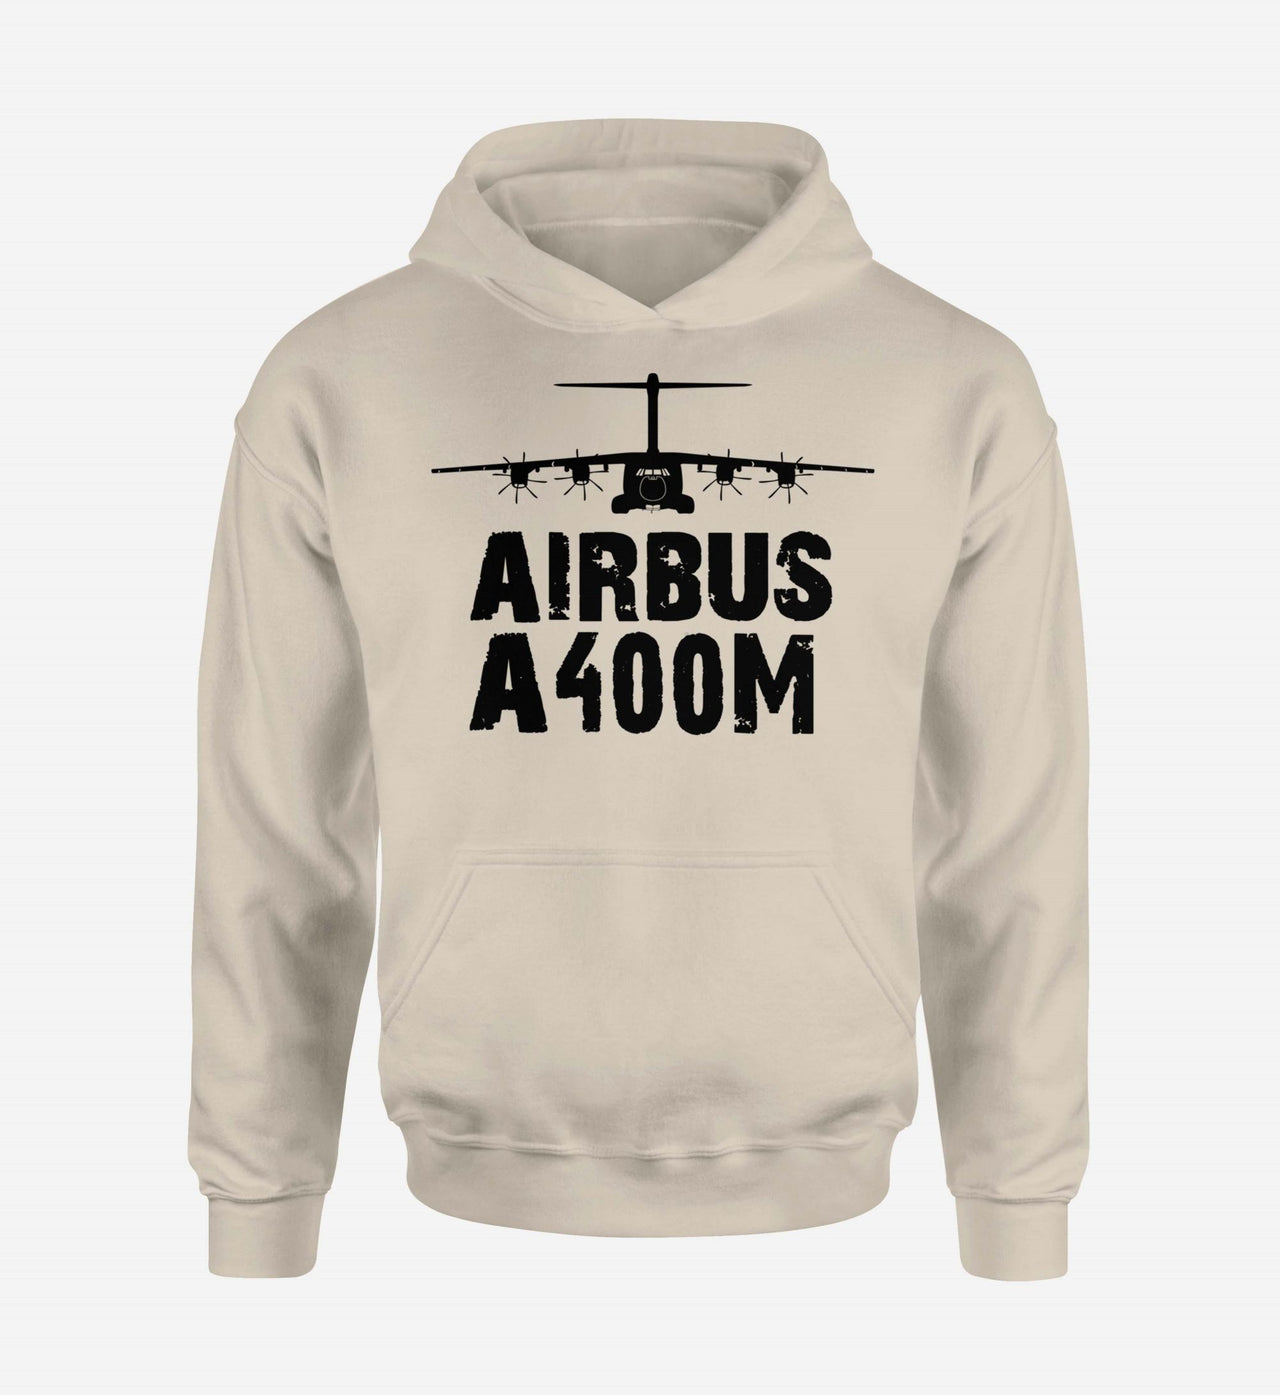 Airbus A400M & Plane Designed Hoodies